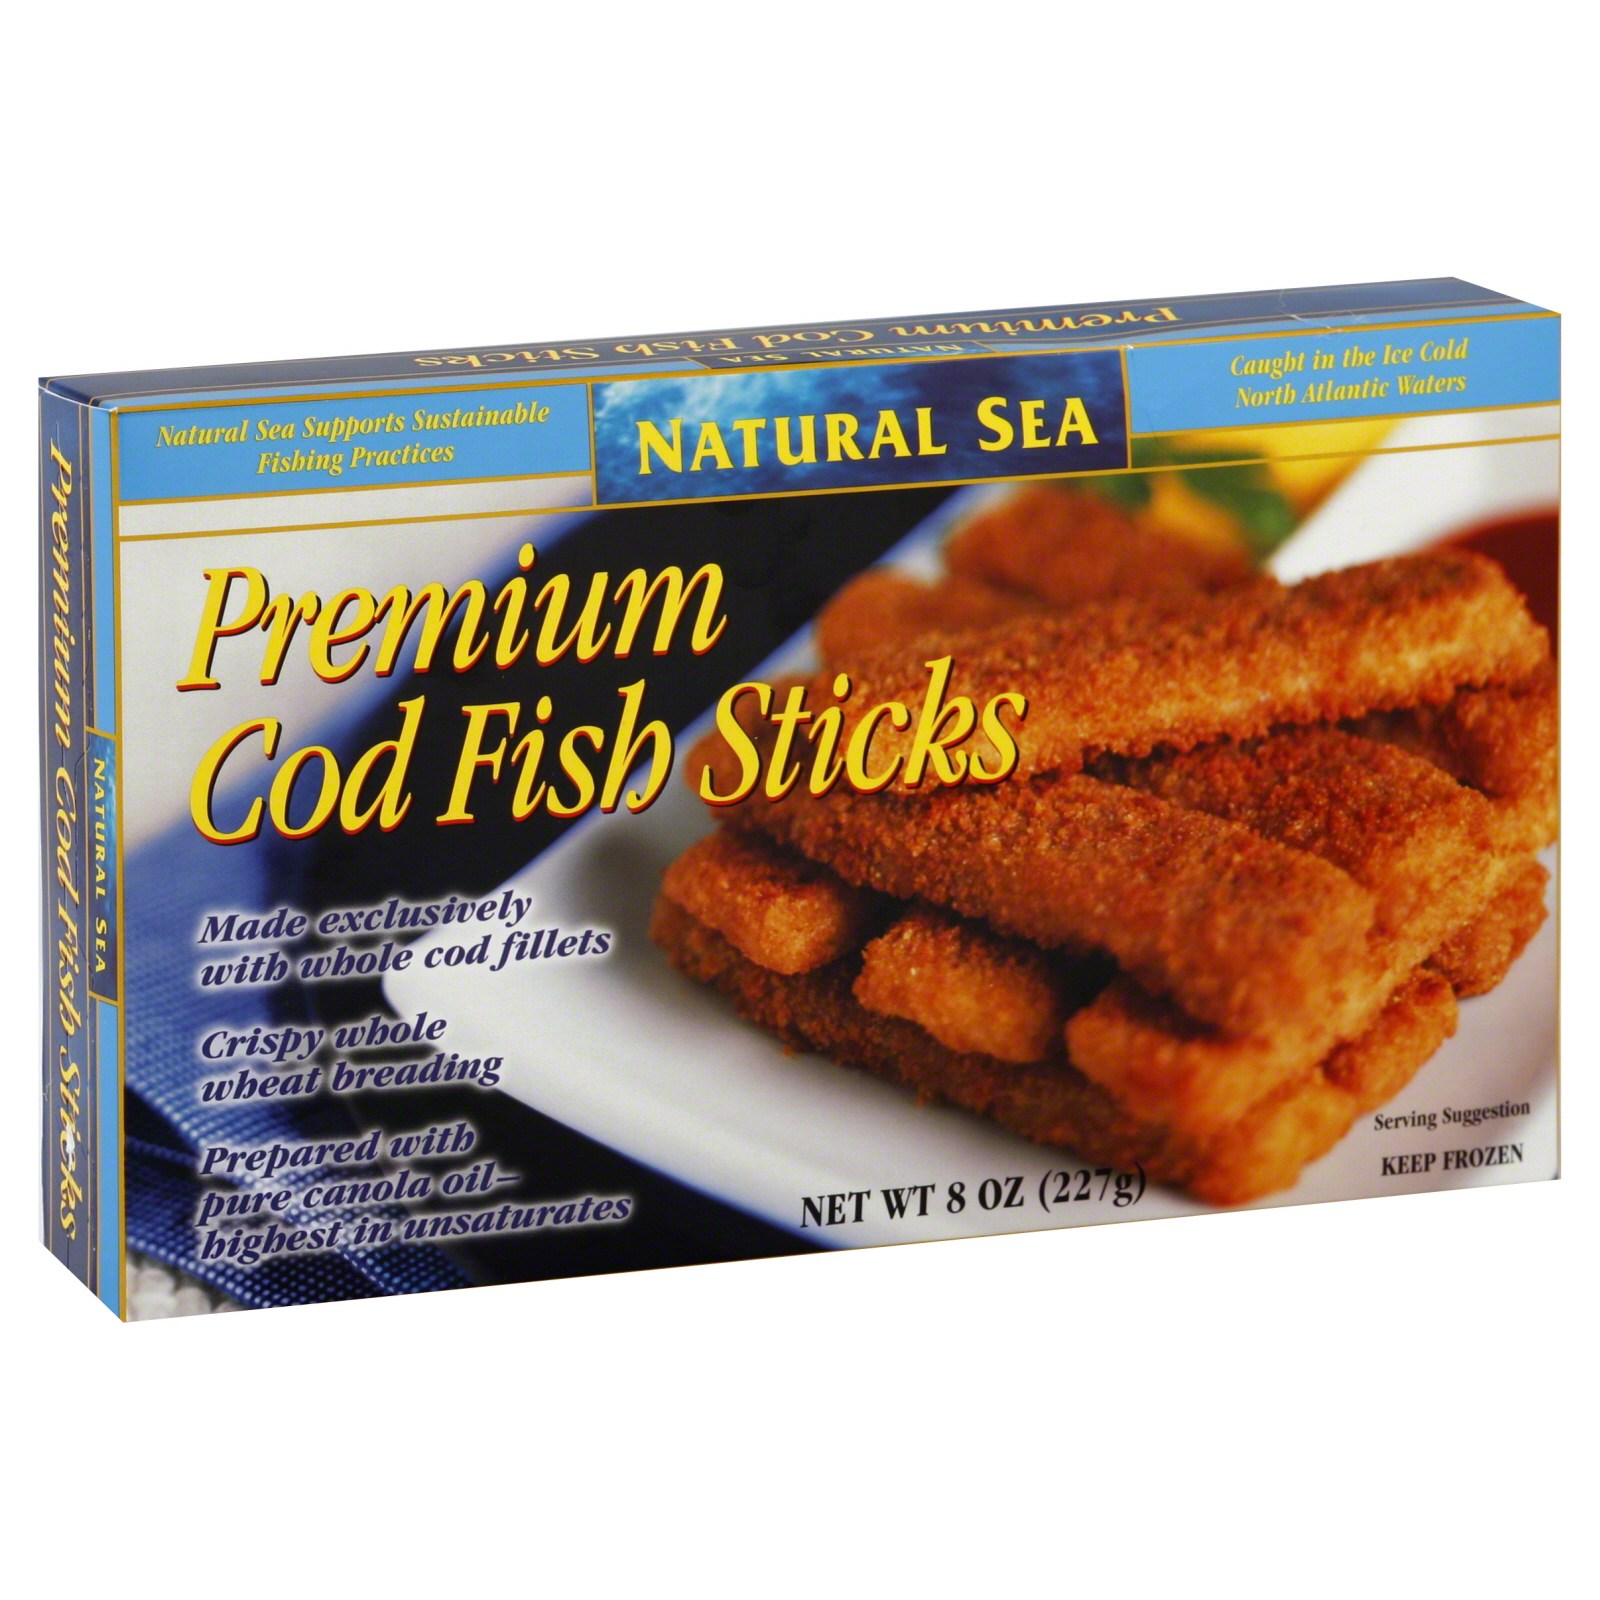 Natural Sea Premium Cod Fish Sticks, 8 oz (227g)